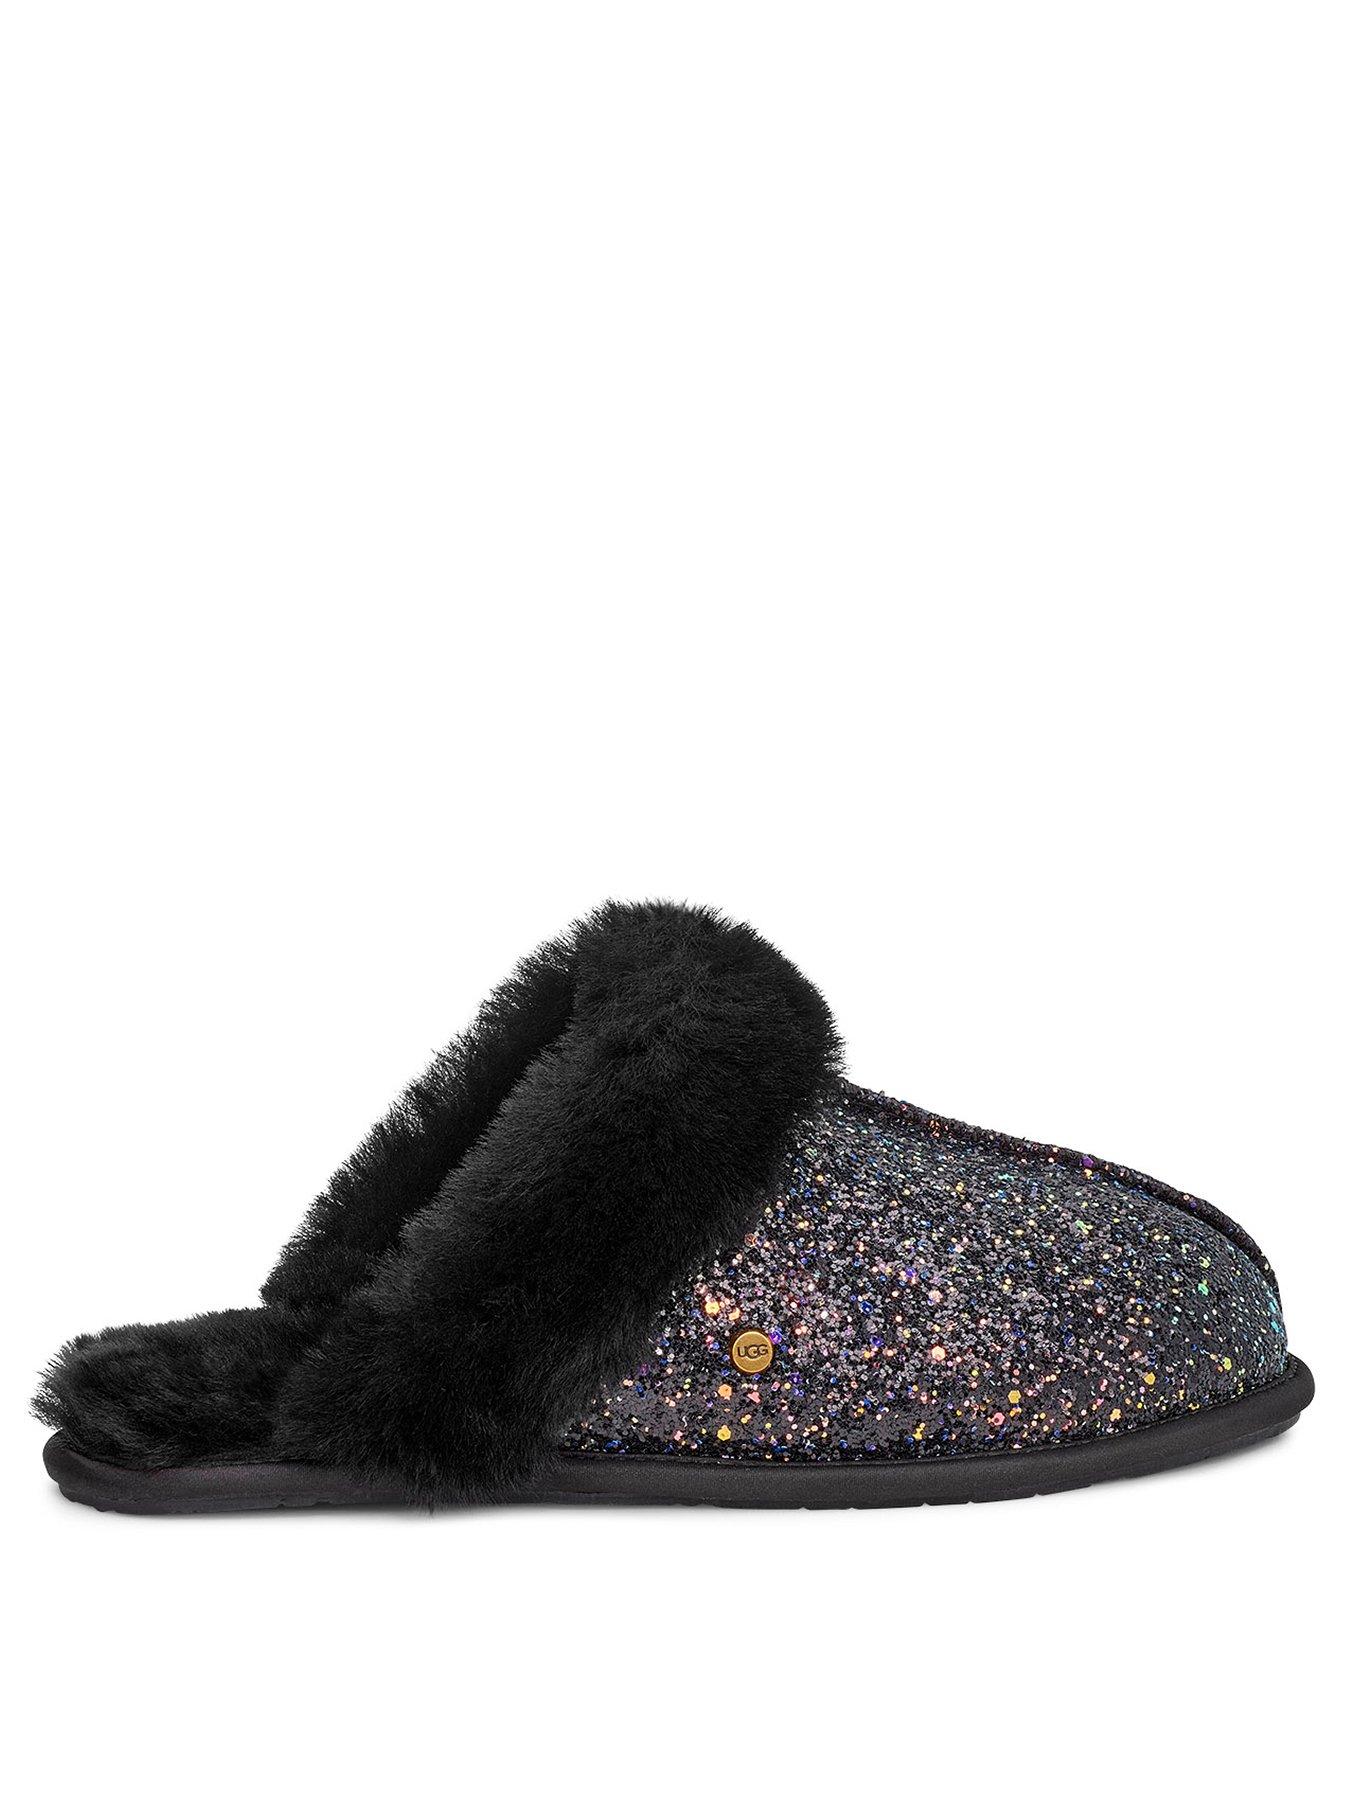 ugg slippers look alike